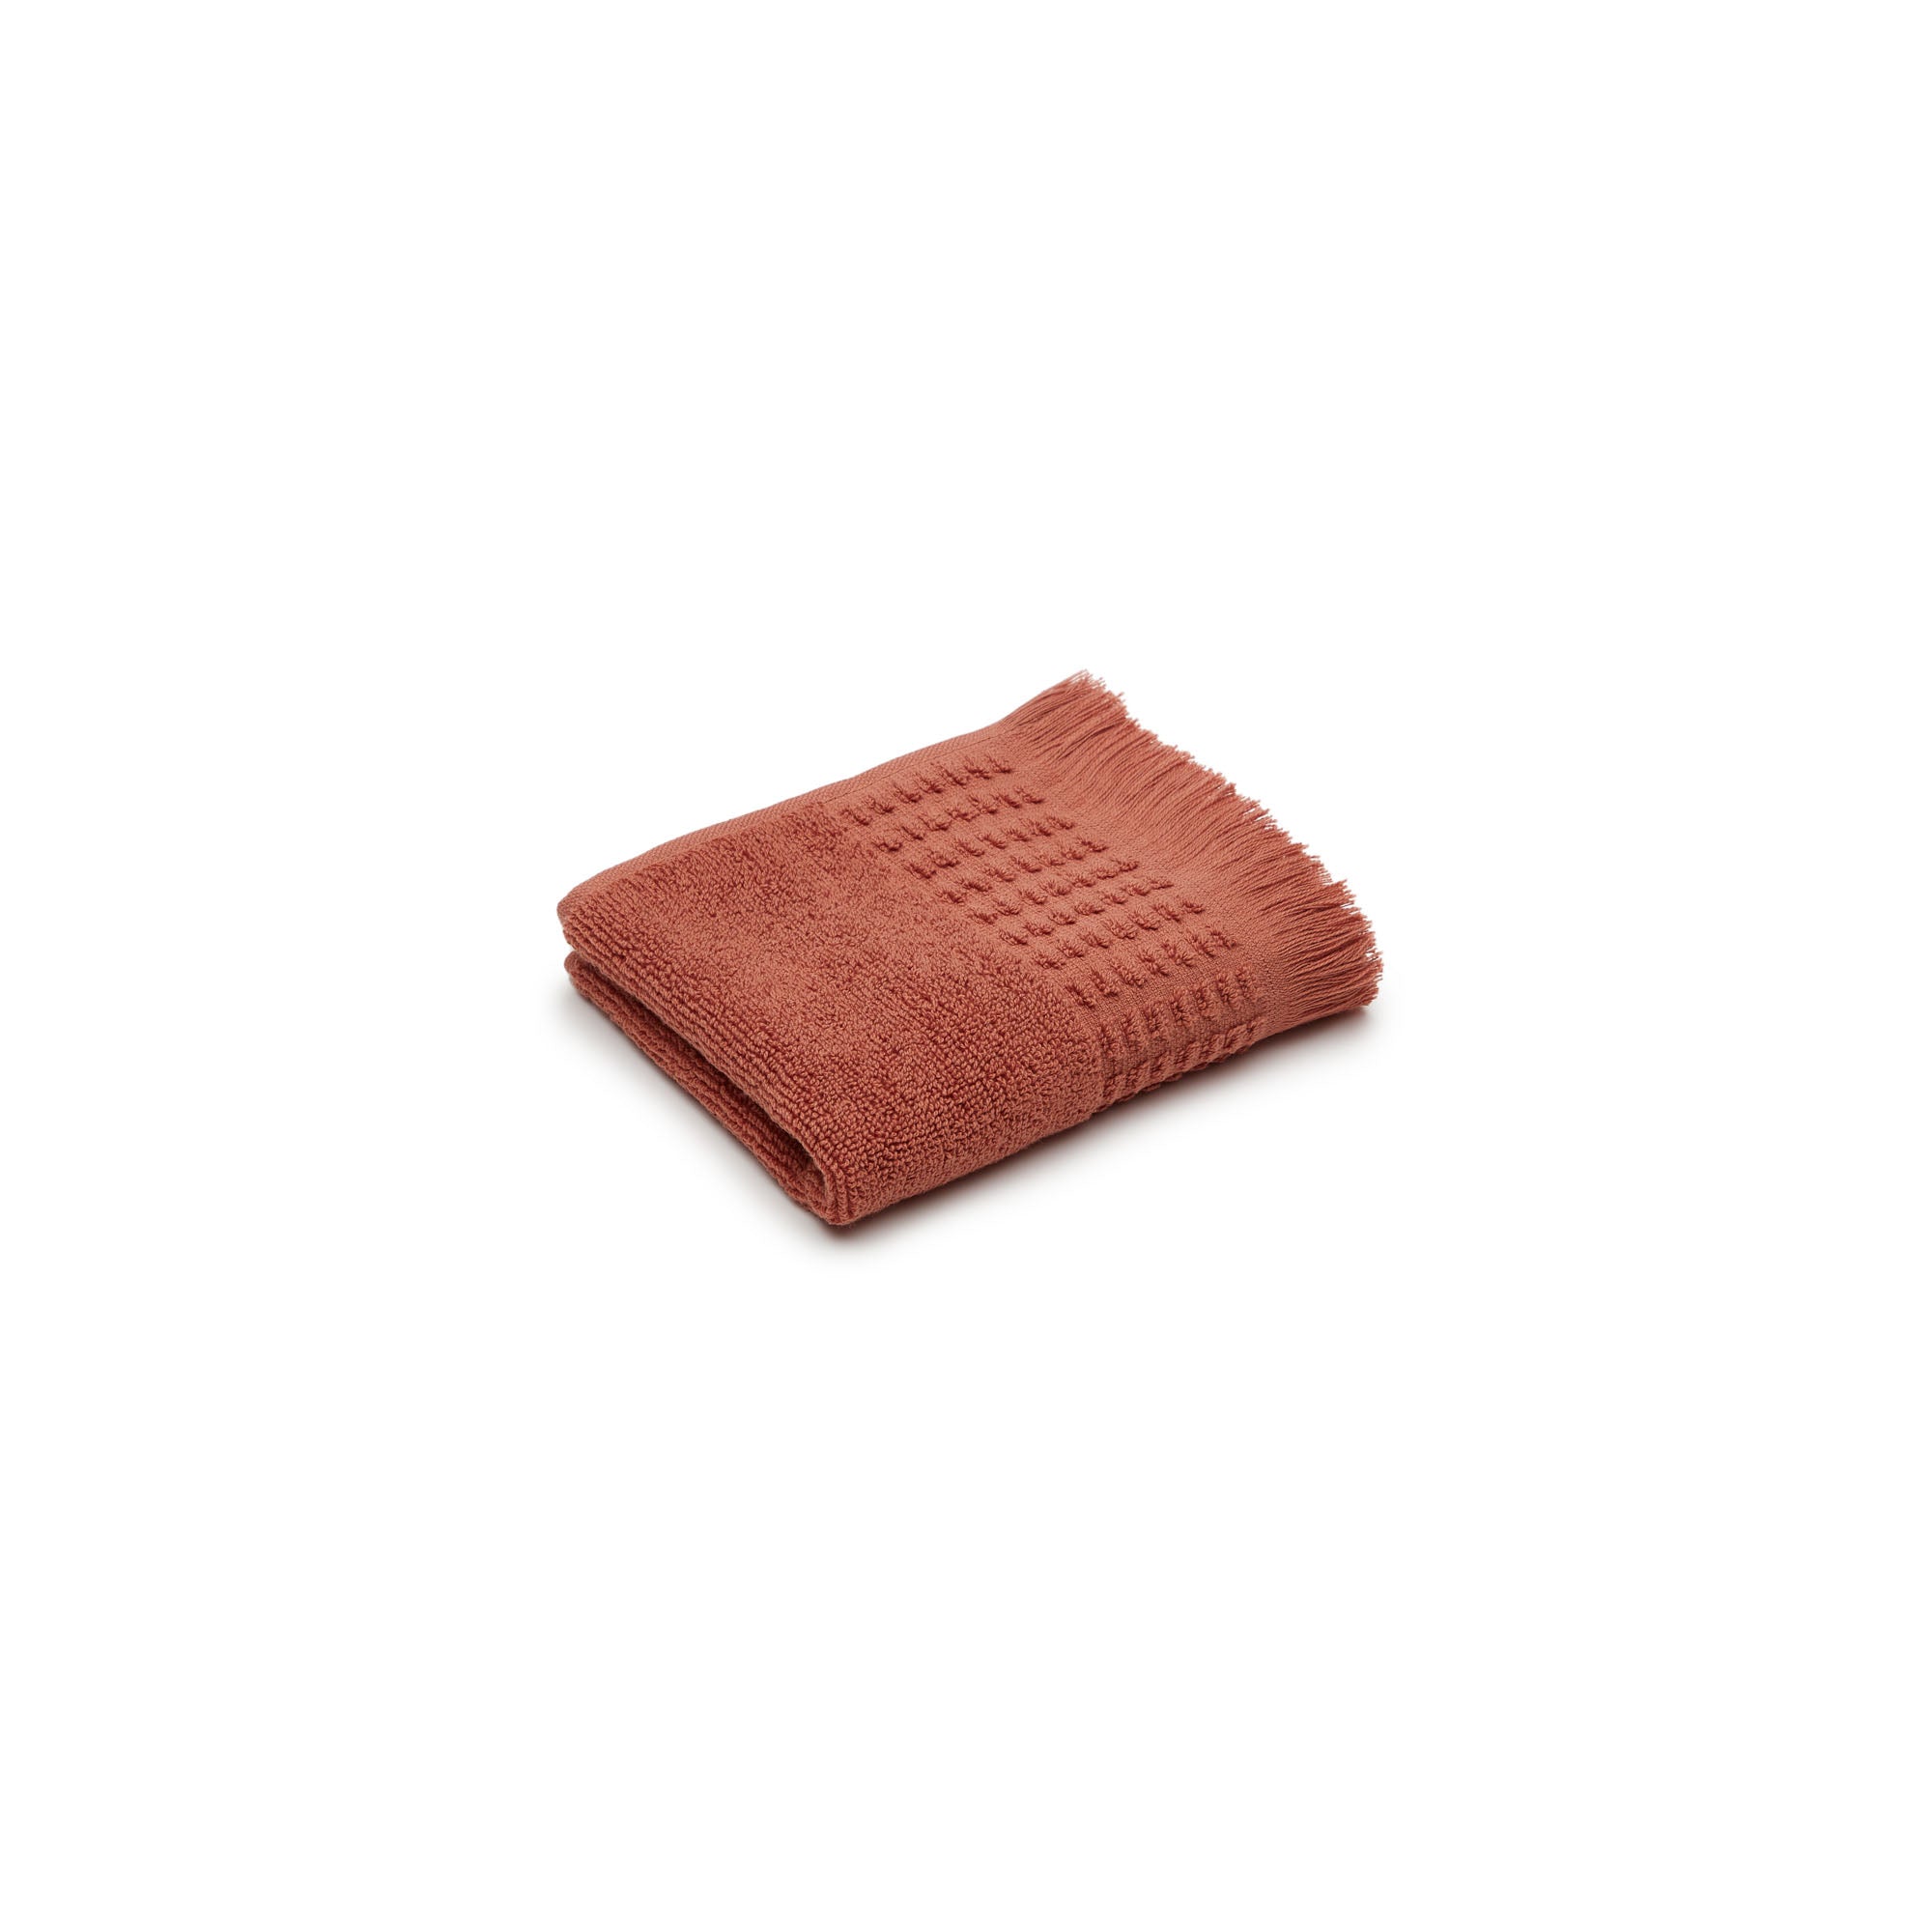 Veta 100% cotton face towel in terracotta, 30 x 50 cm